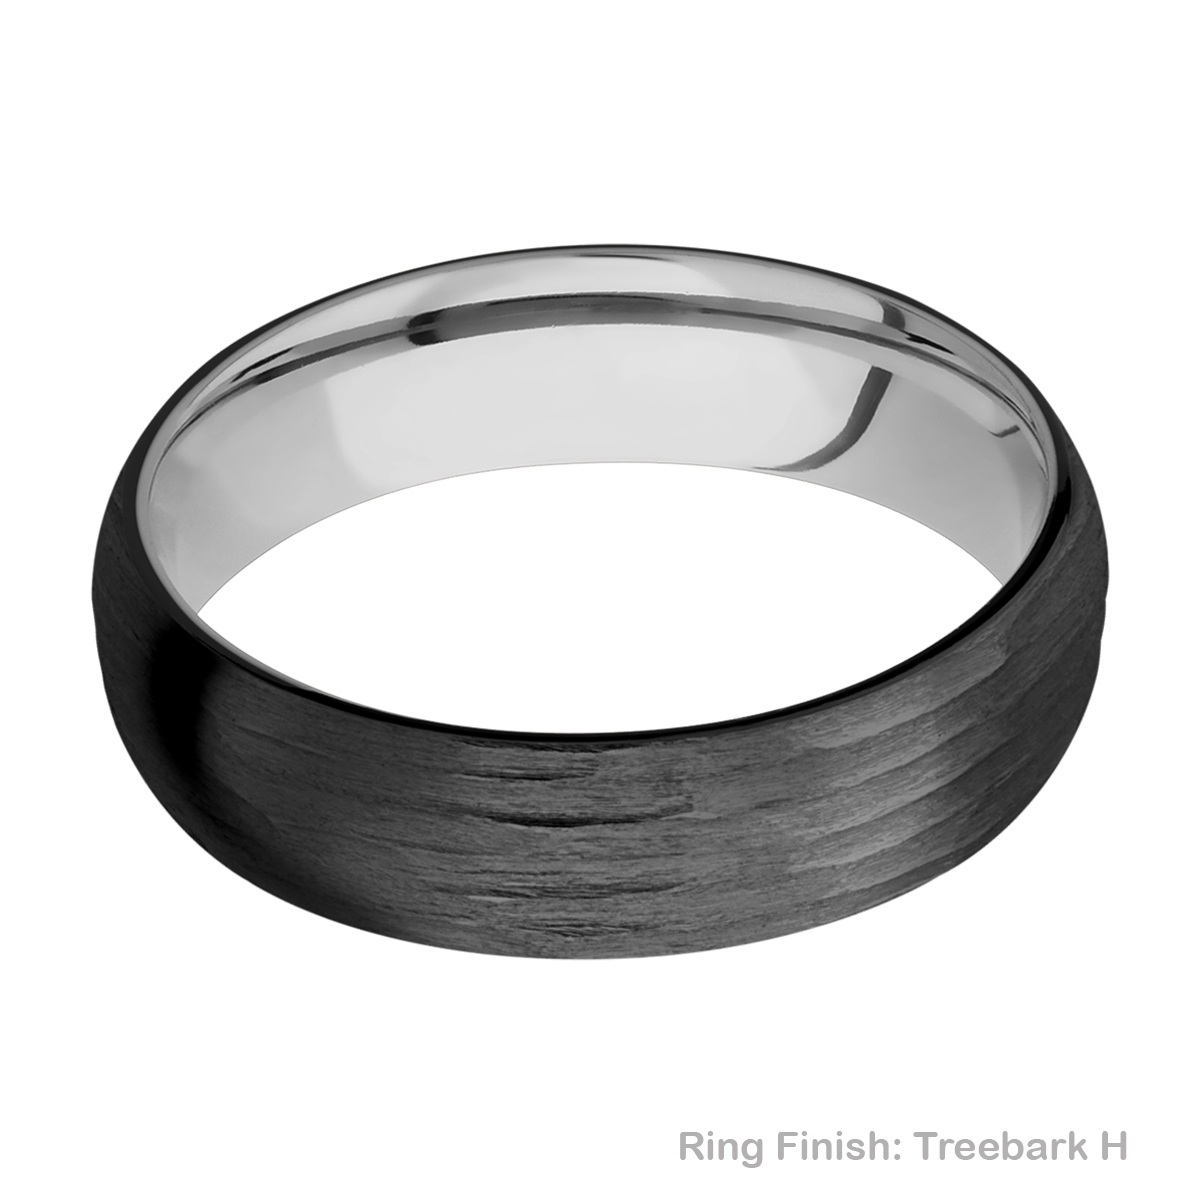 Lashbrook CCSLEEVEZ6D Zirconium and Cobalt Chrome Wedding Ring or Band